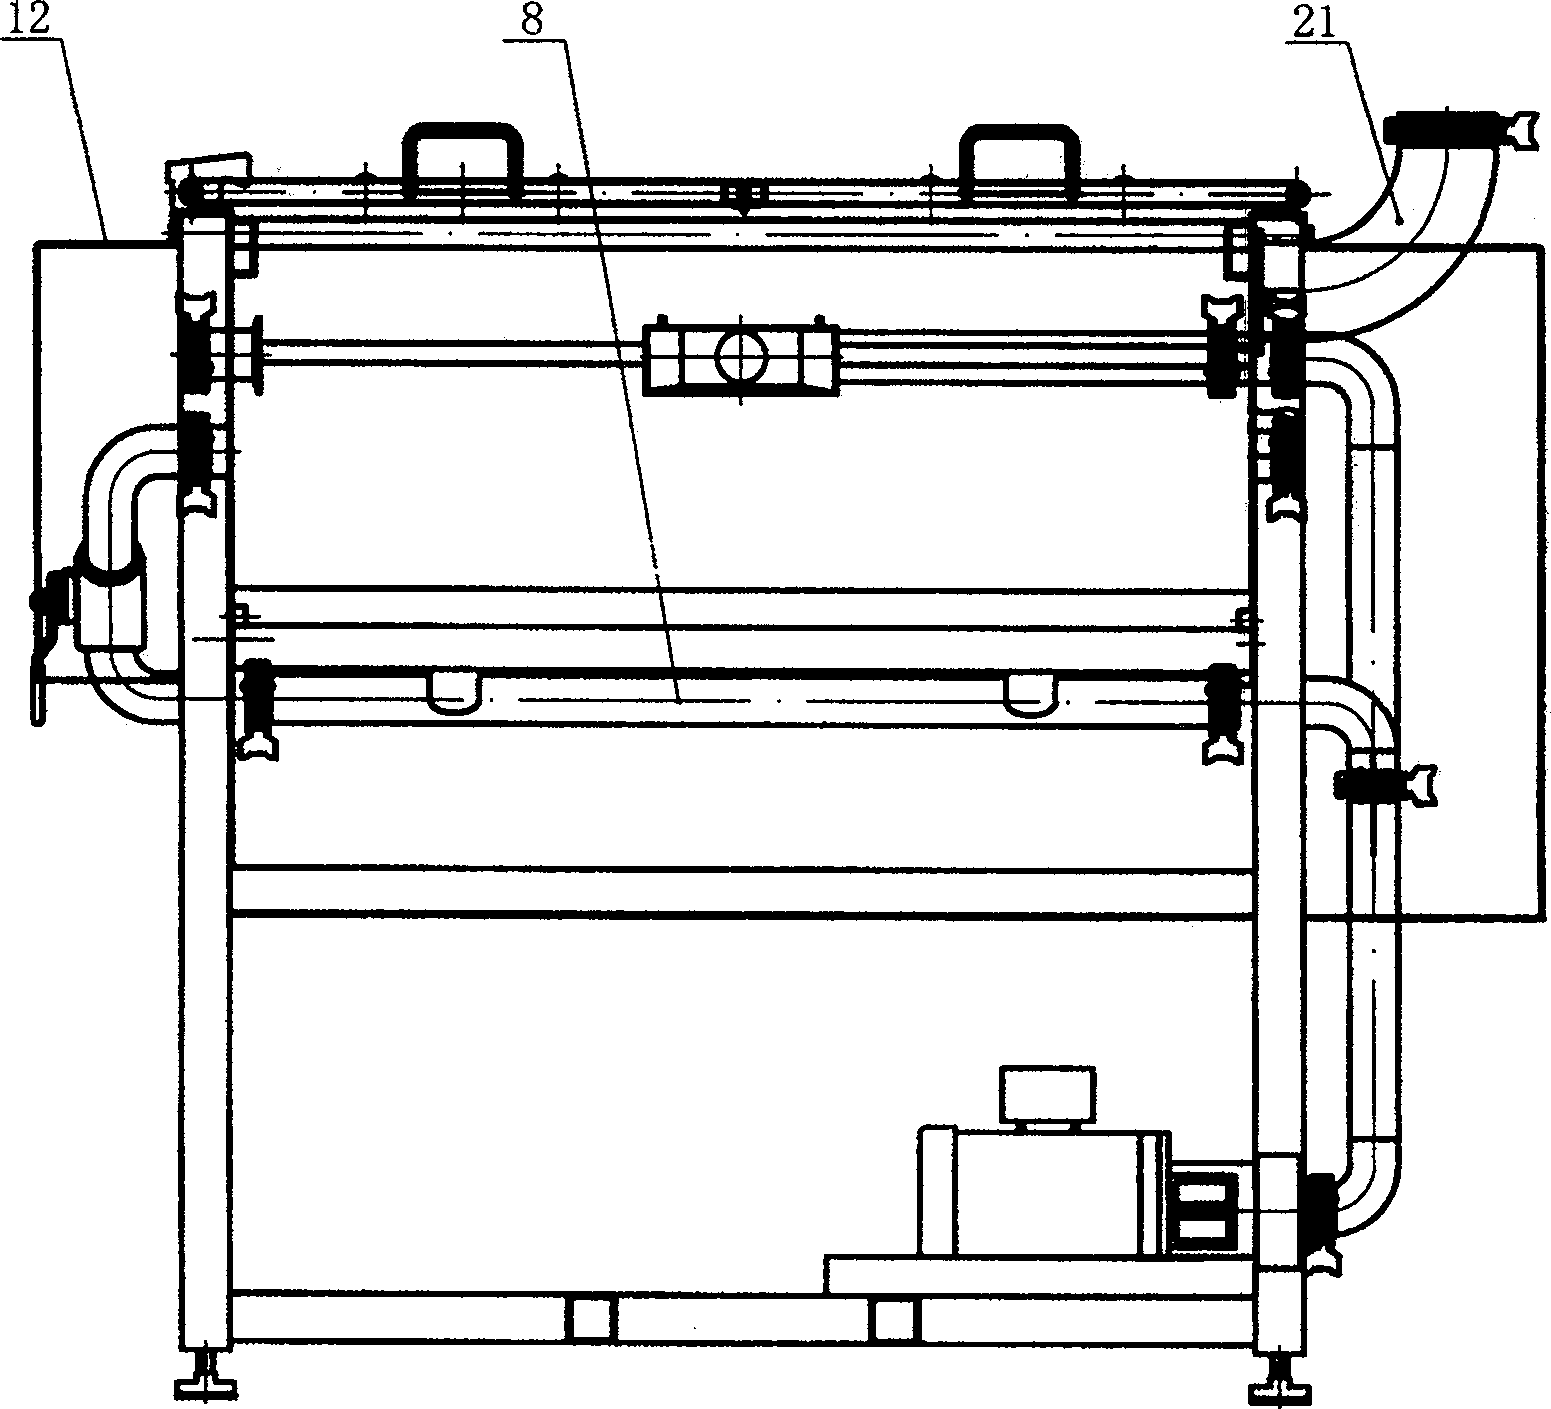 Mechanical tape type oil filter